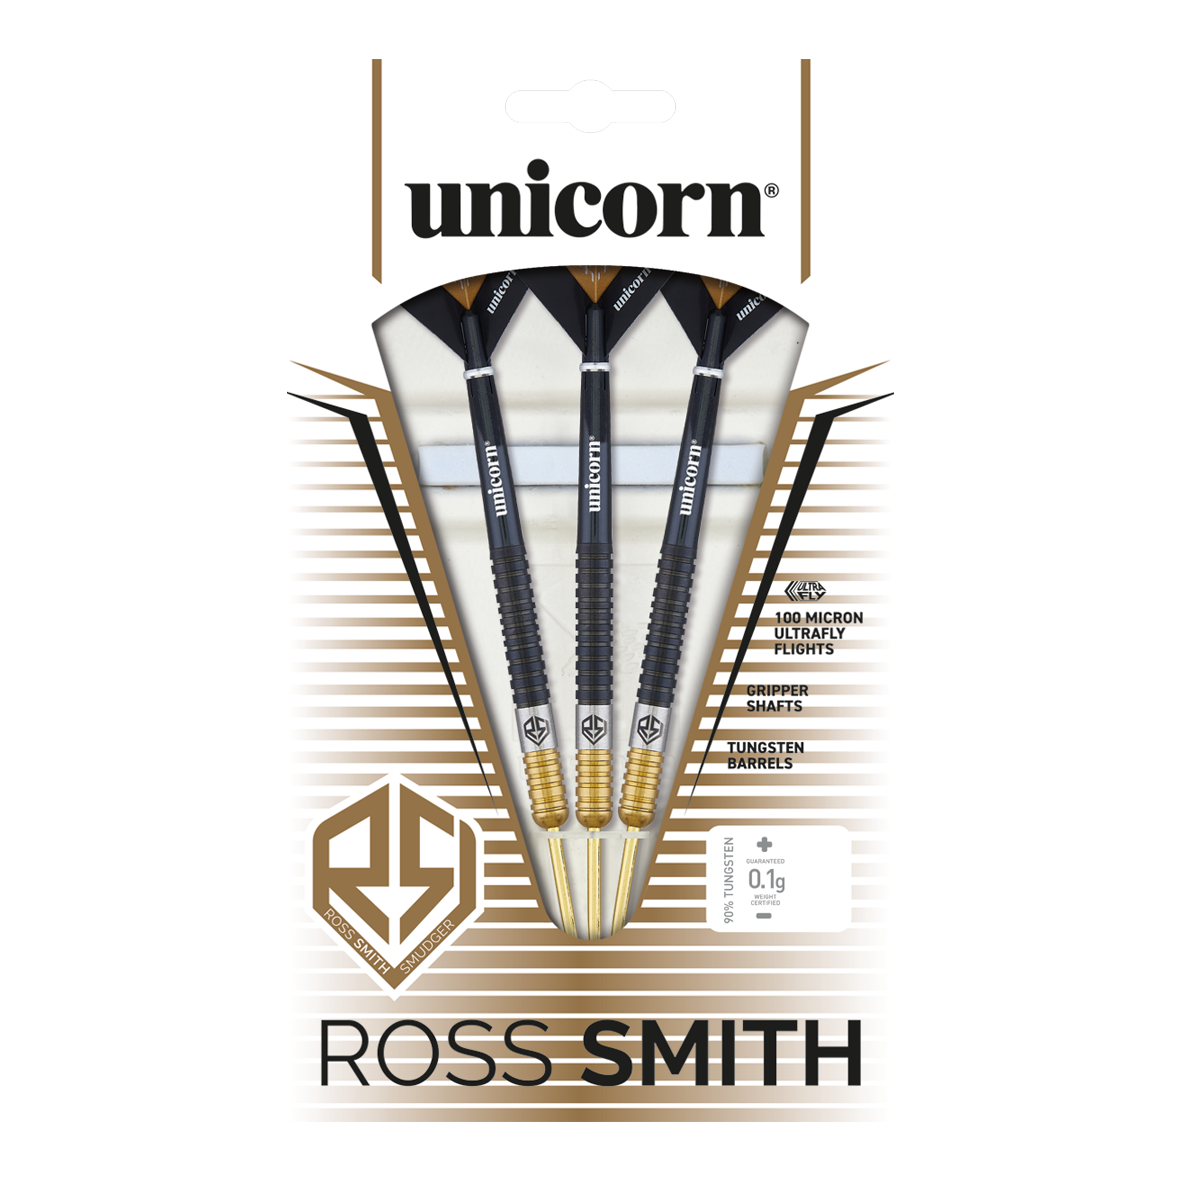 Unicorn Ross Smith Two-Tone Steeldarts